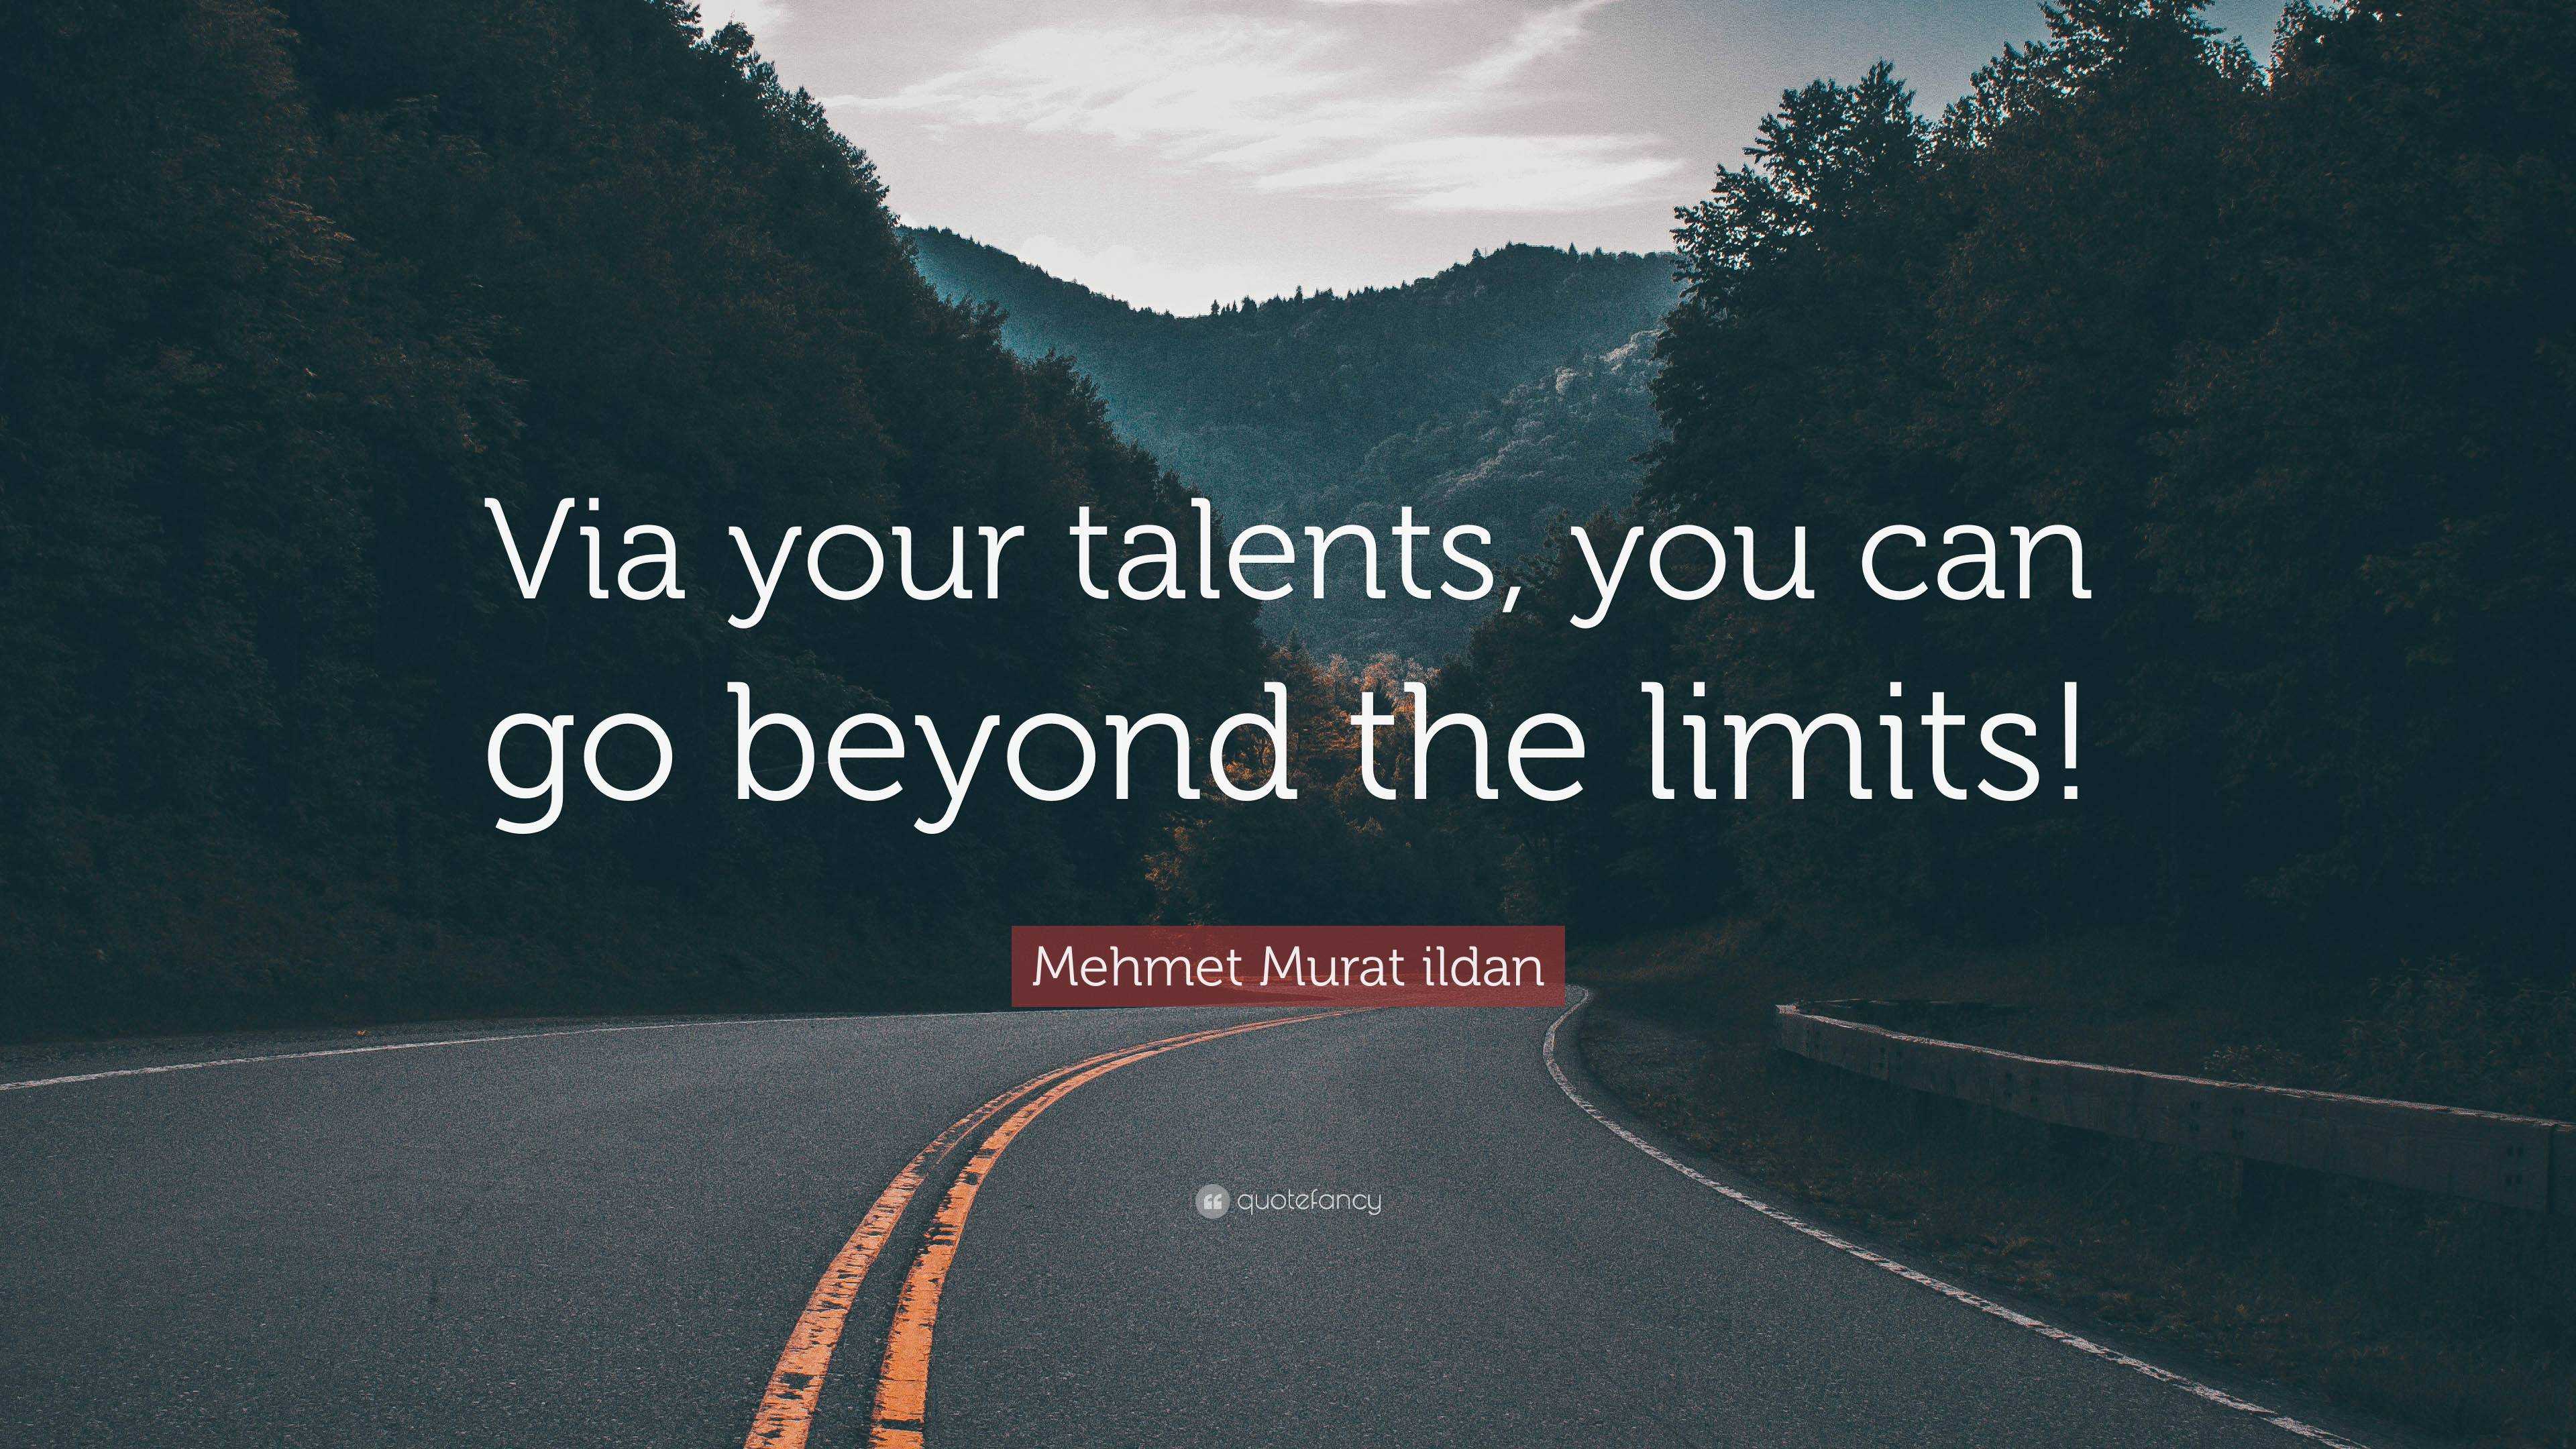 Mehmet Murat Ildan Quote: “via Your Talents, You Can Go Beyond The Limits!”